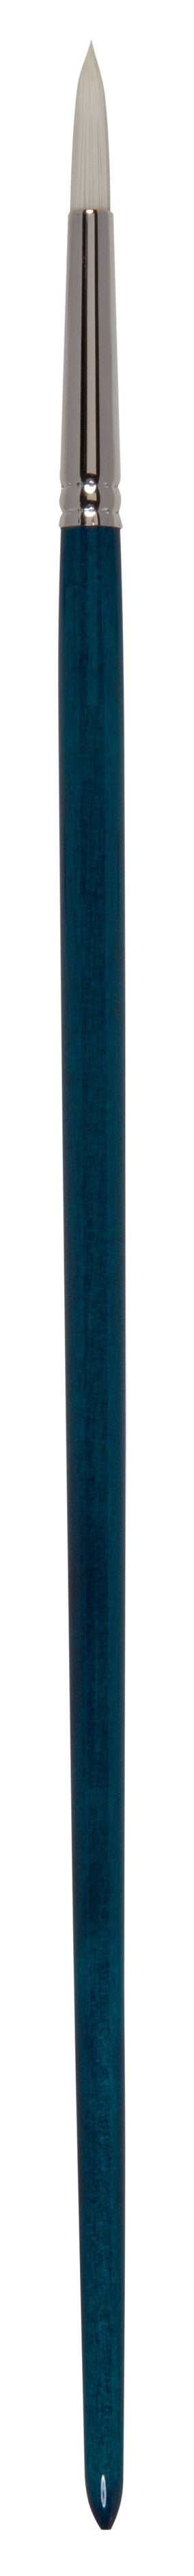 Zahn Acrylic Brush Round, Infinity, 9975 Size 8